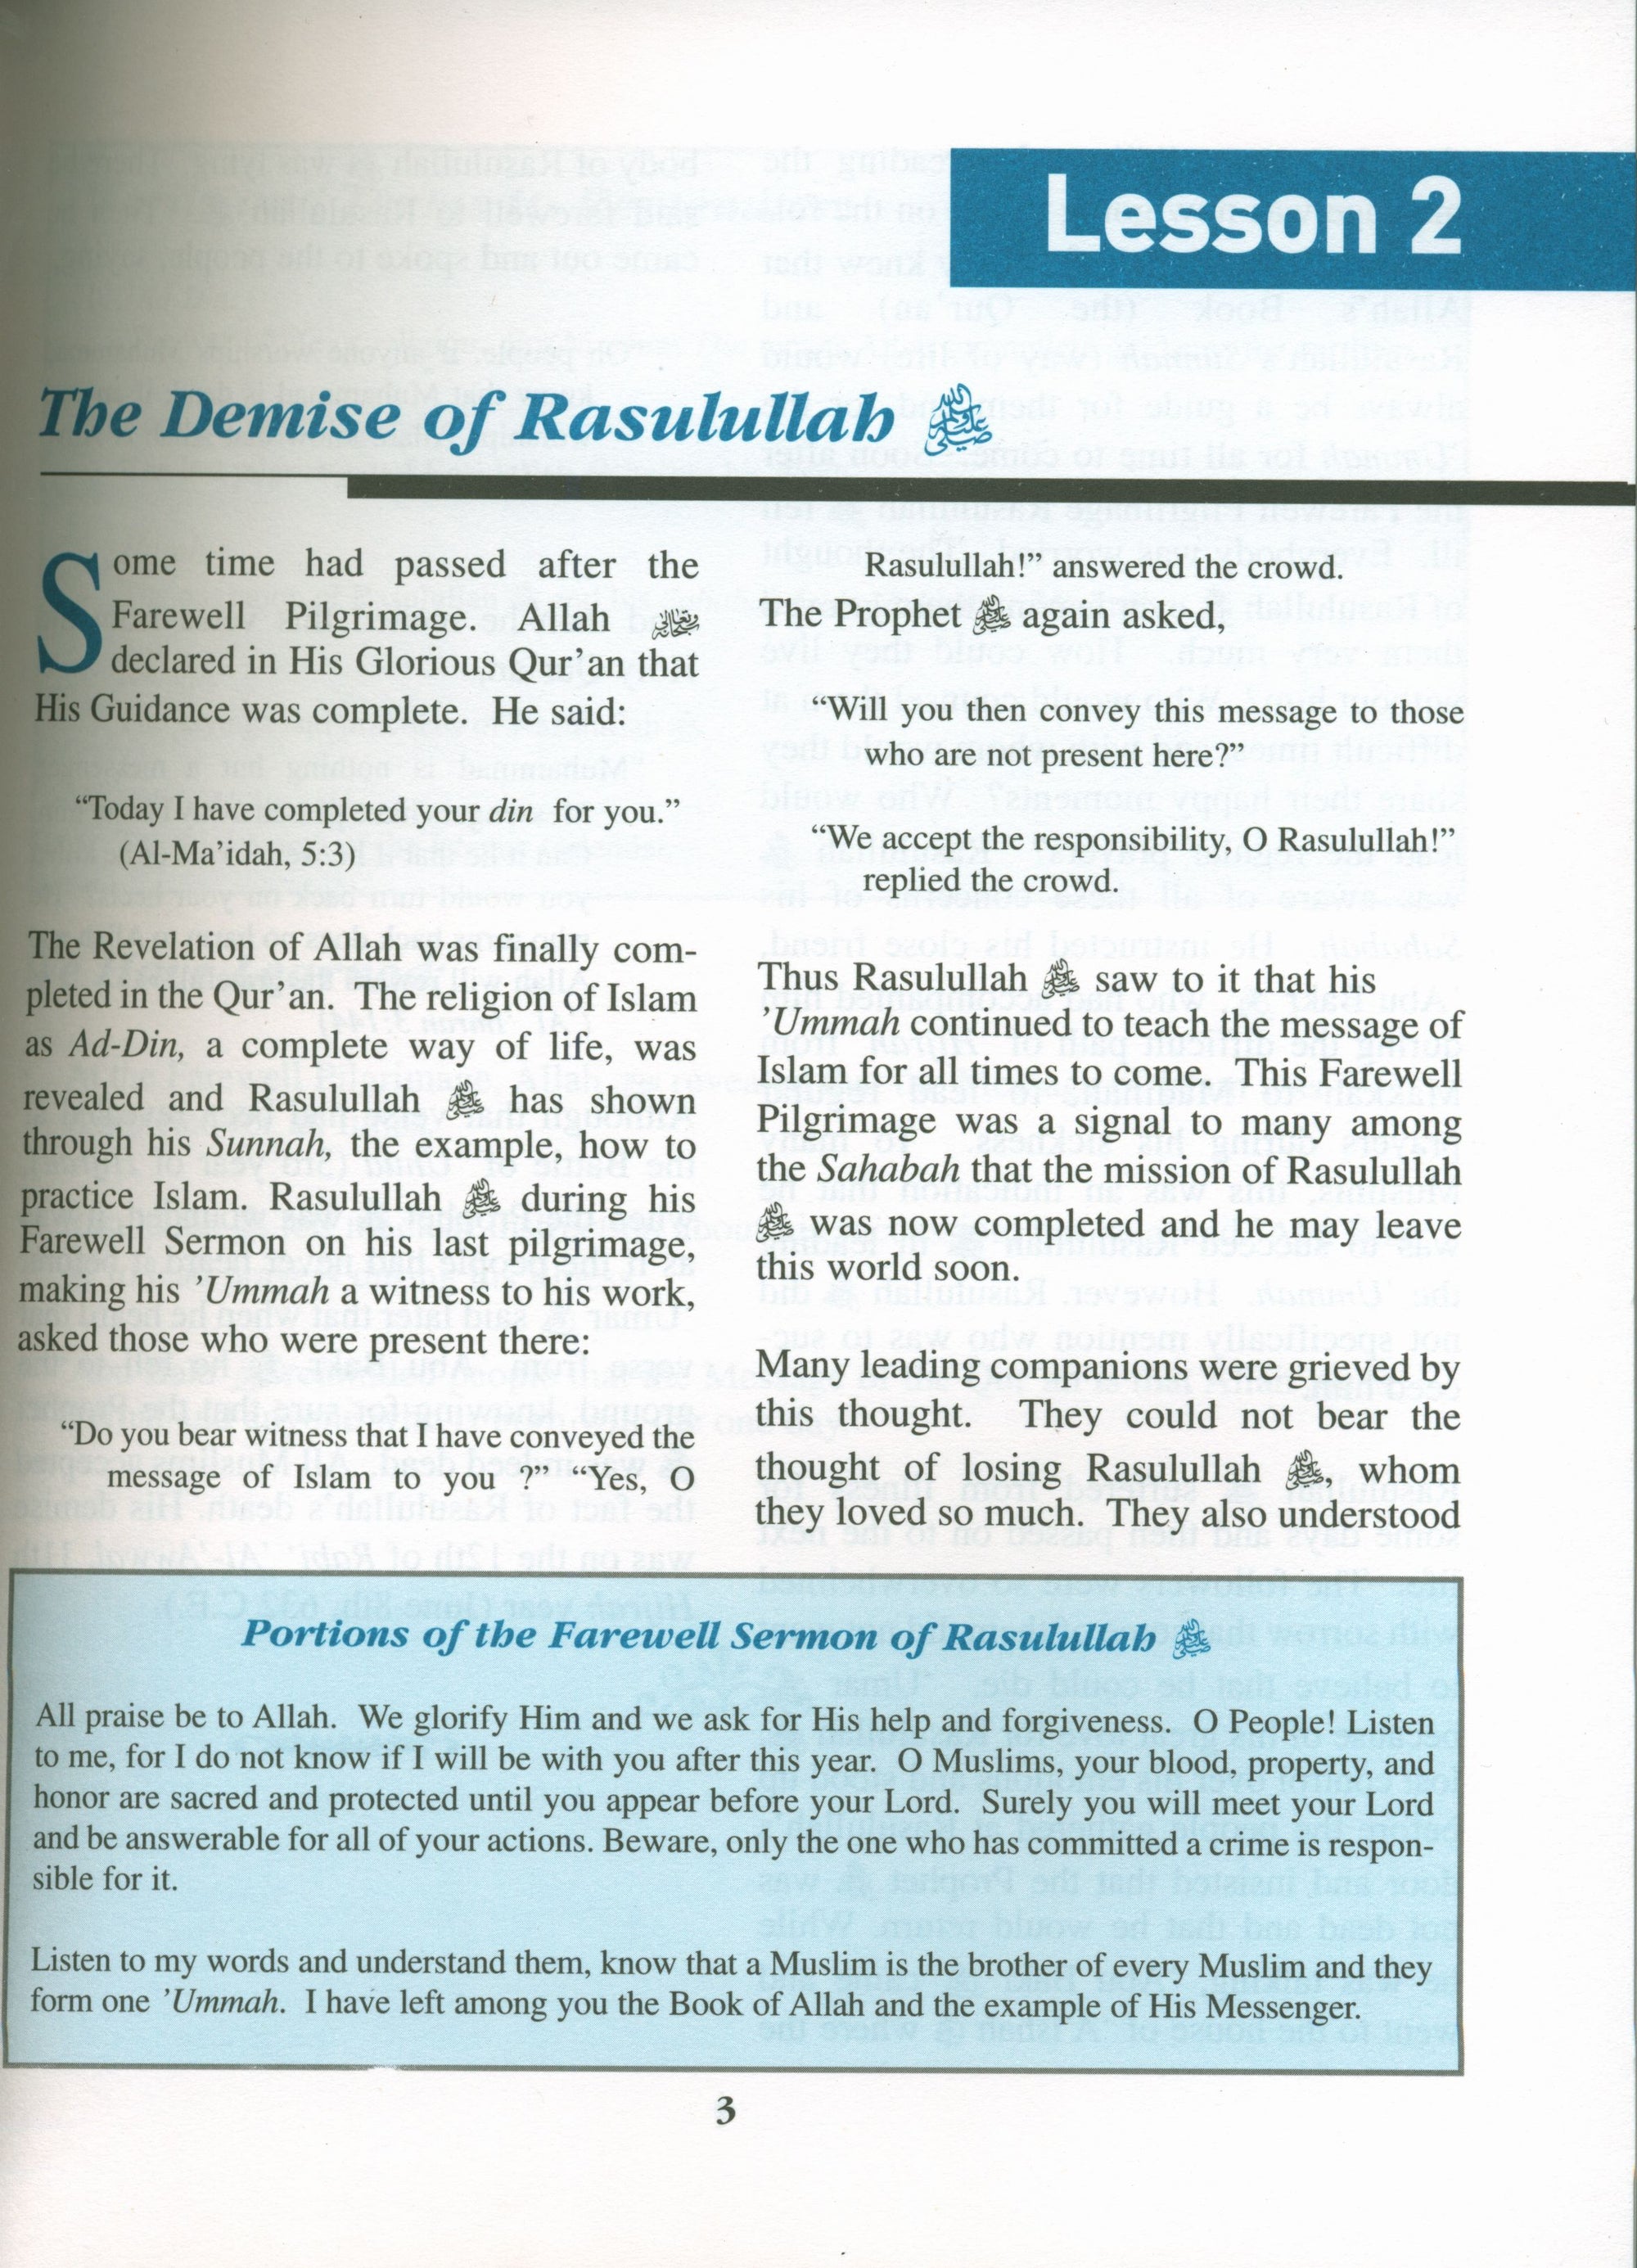 The History of Al-Khilafah Ar-Rashidah Textbook - 7th Grade